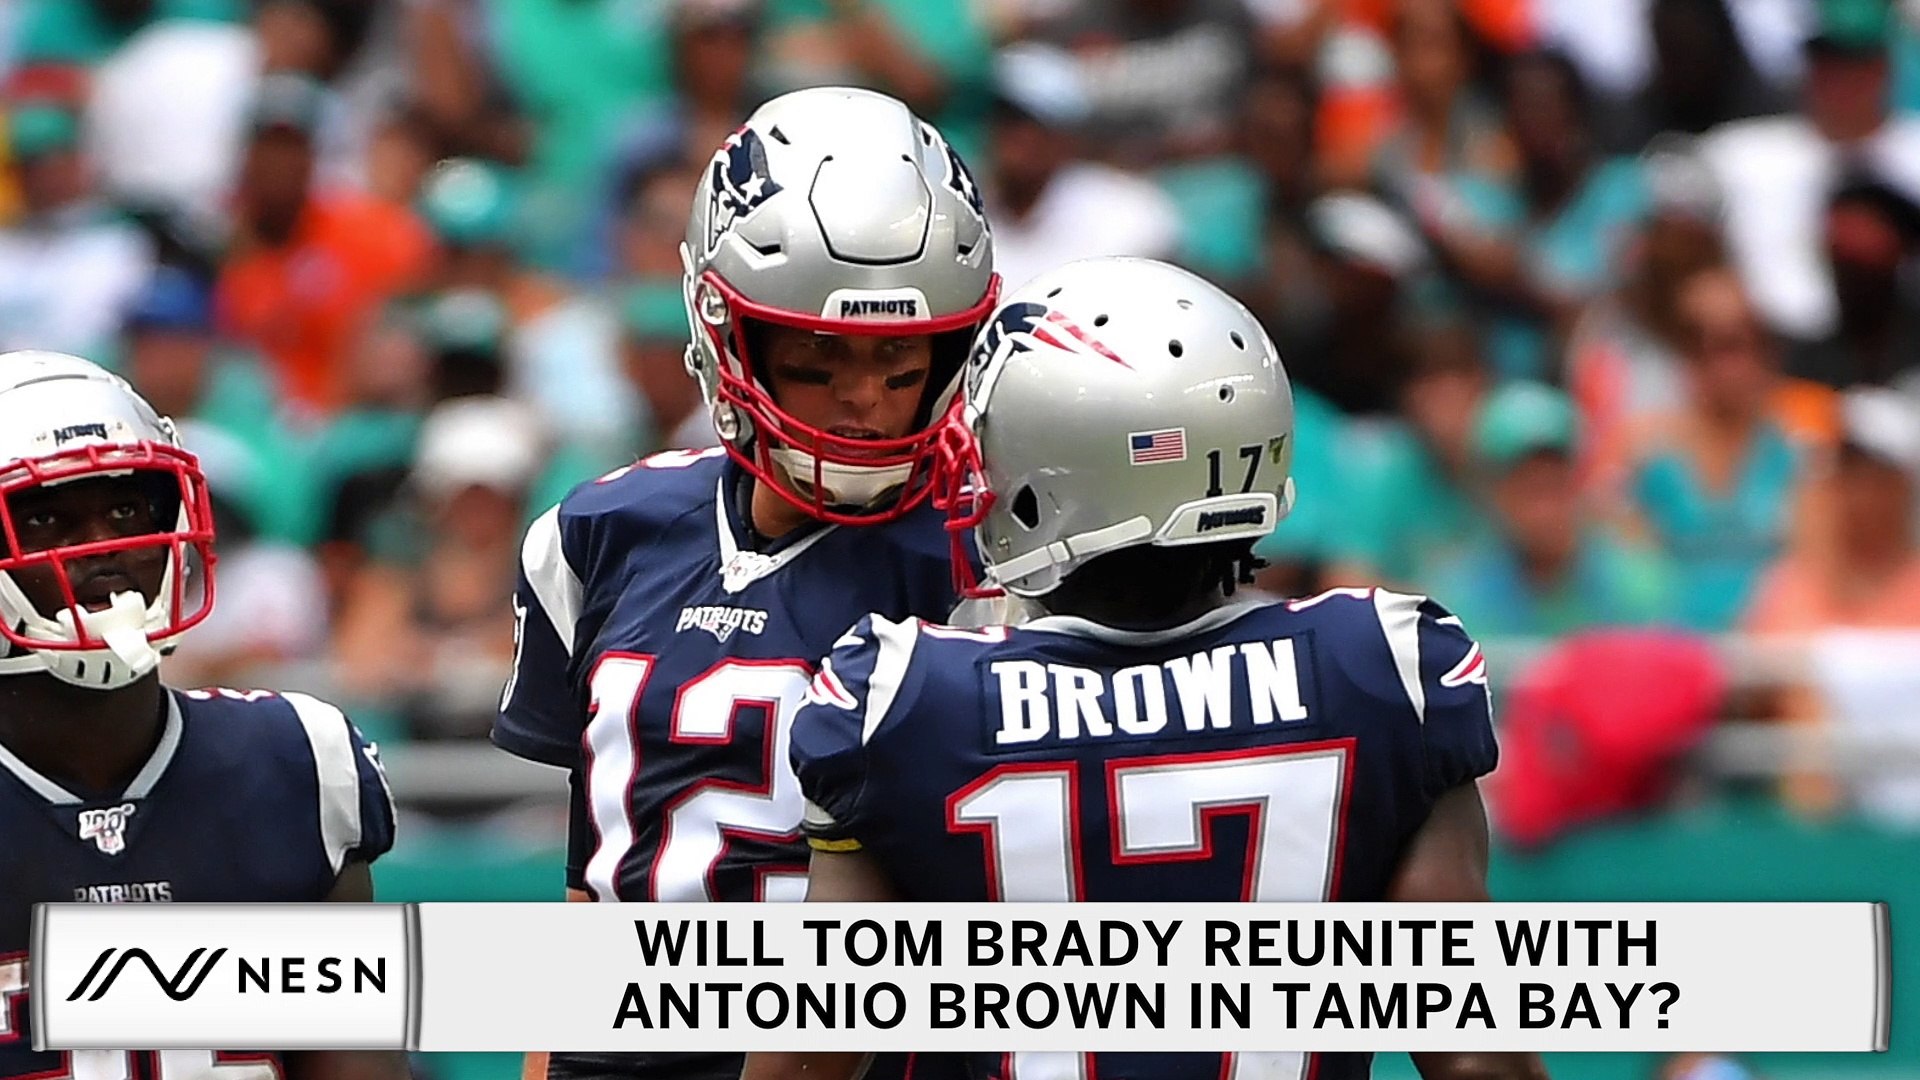 NFL Rumors: Antonio Brown, Tom Brady Reunion In Tampa? - video Dailymotion